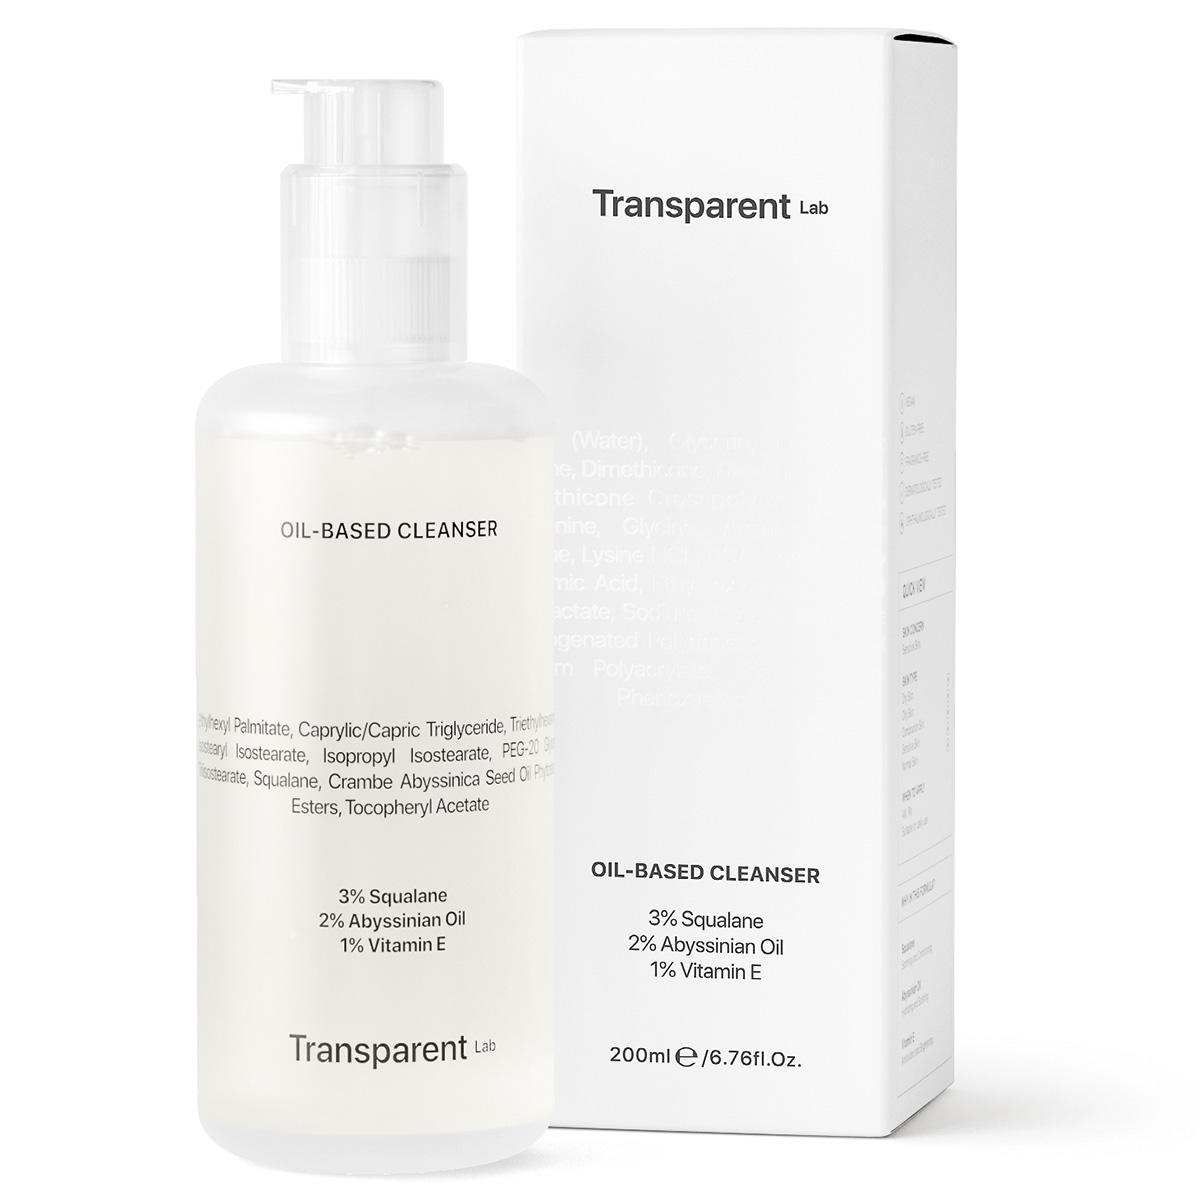 Transparent Lab Oil-Based Cleanser 200 ml - 2